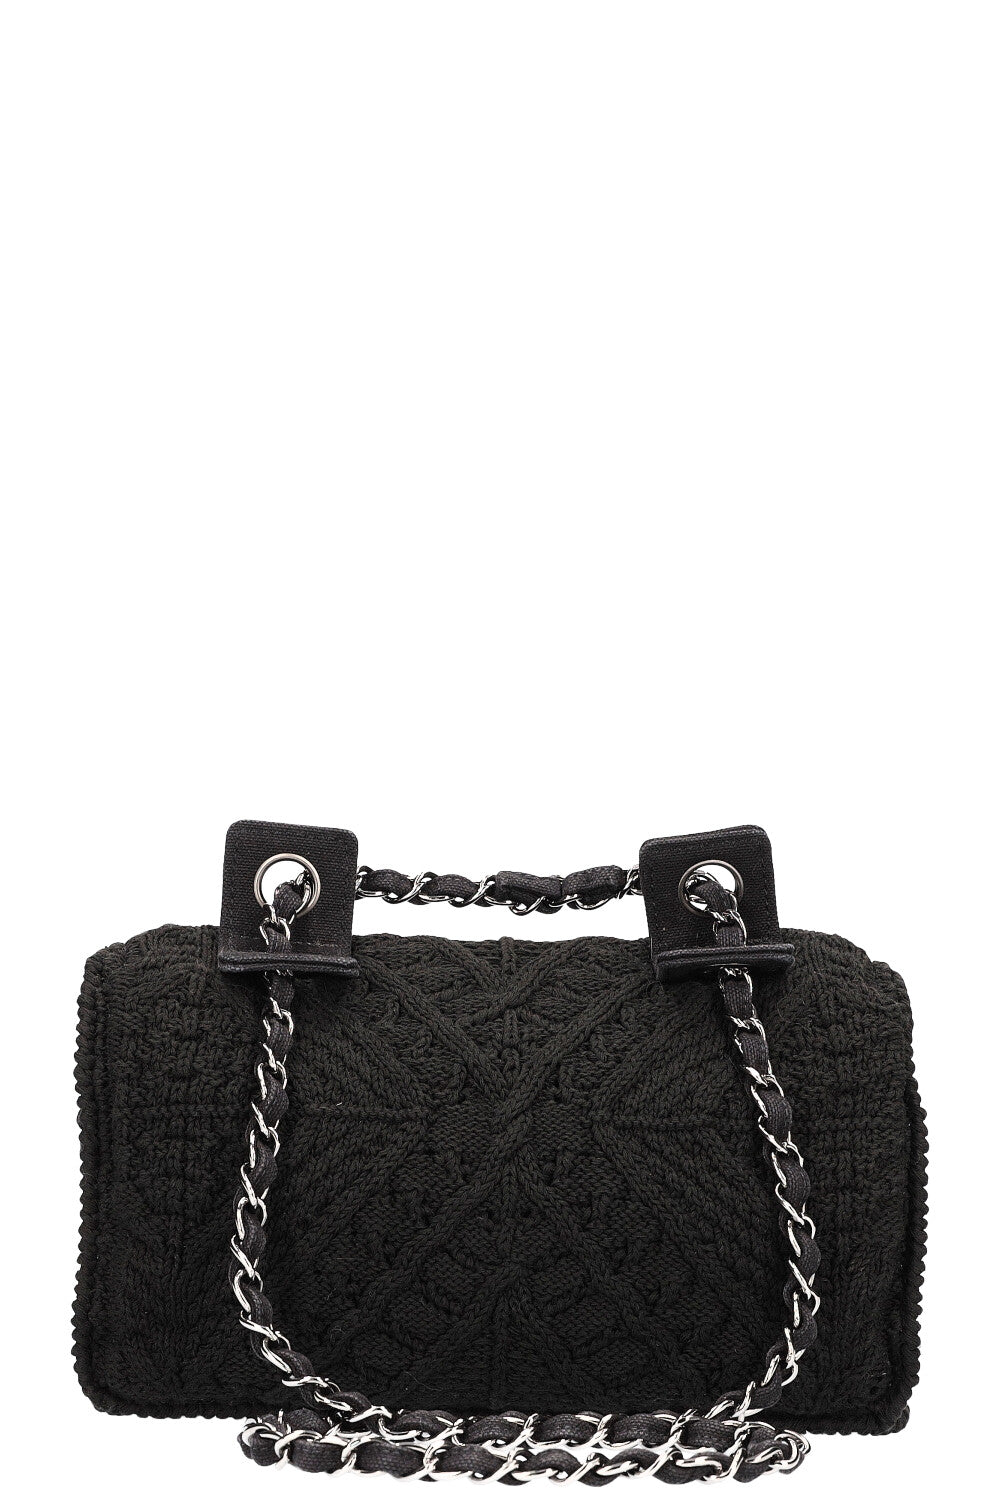 CHANEL Crochet Flap Bag